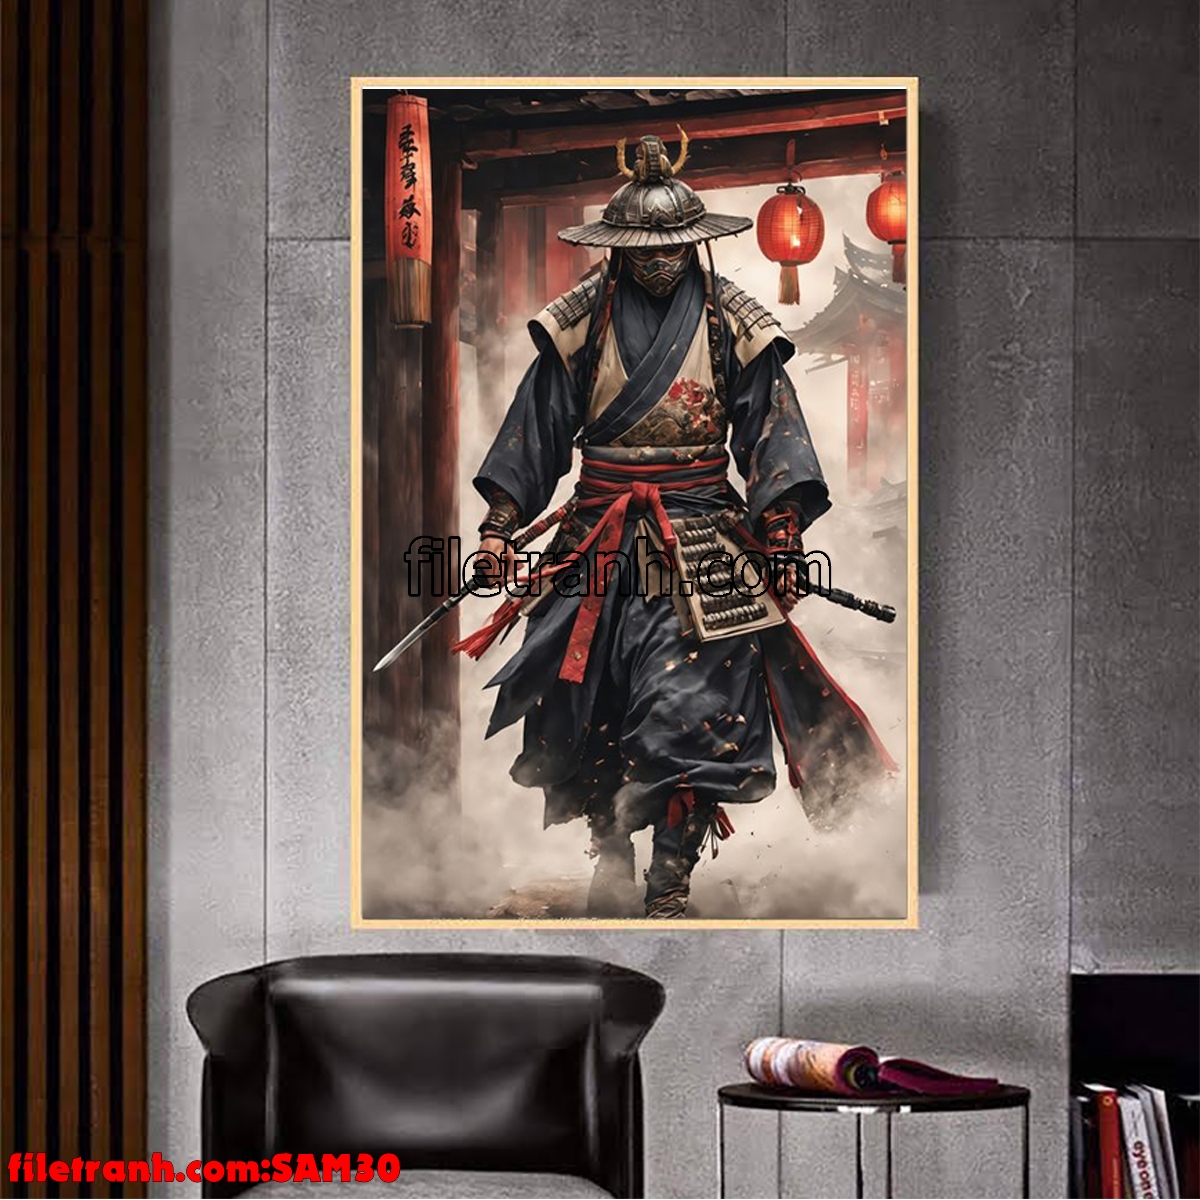 https://filetranh.com/samurai/file-tranh-samurai-vo-si-nhat-ban-sam30.html